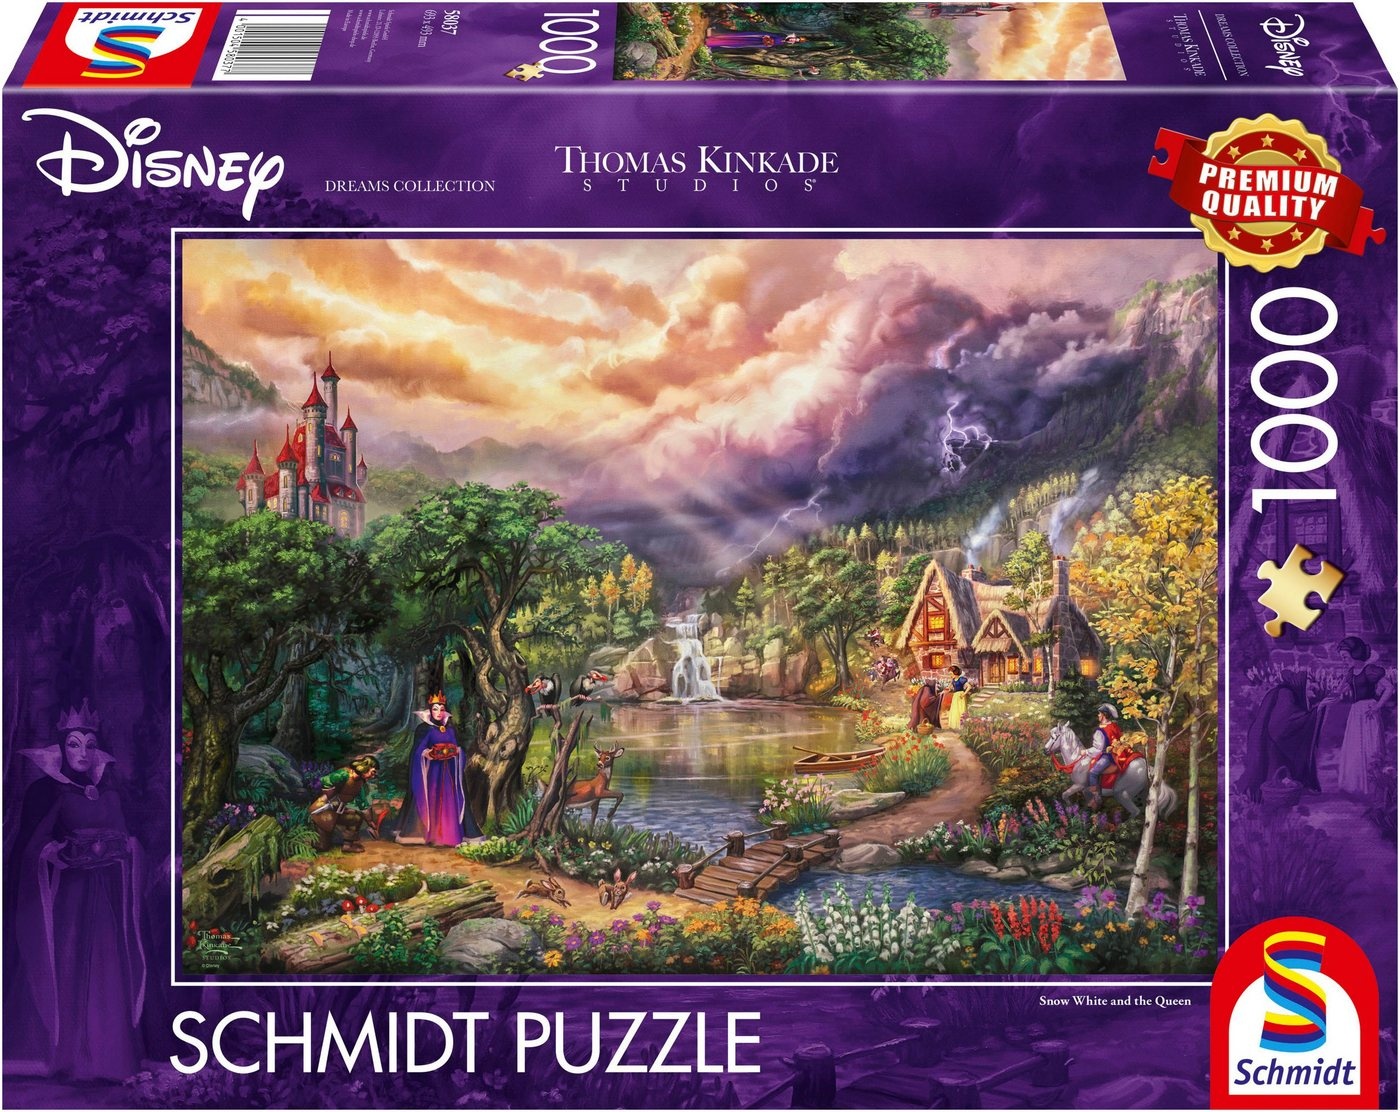 Schmidt Spiele Puzzle Disney, Snow White and the Queen von Thomas Kinkade, 1000 Puzzleteile bunt